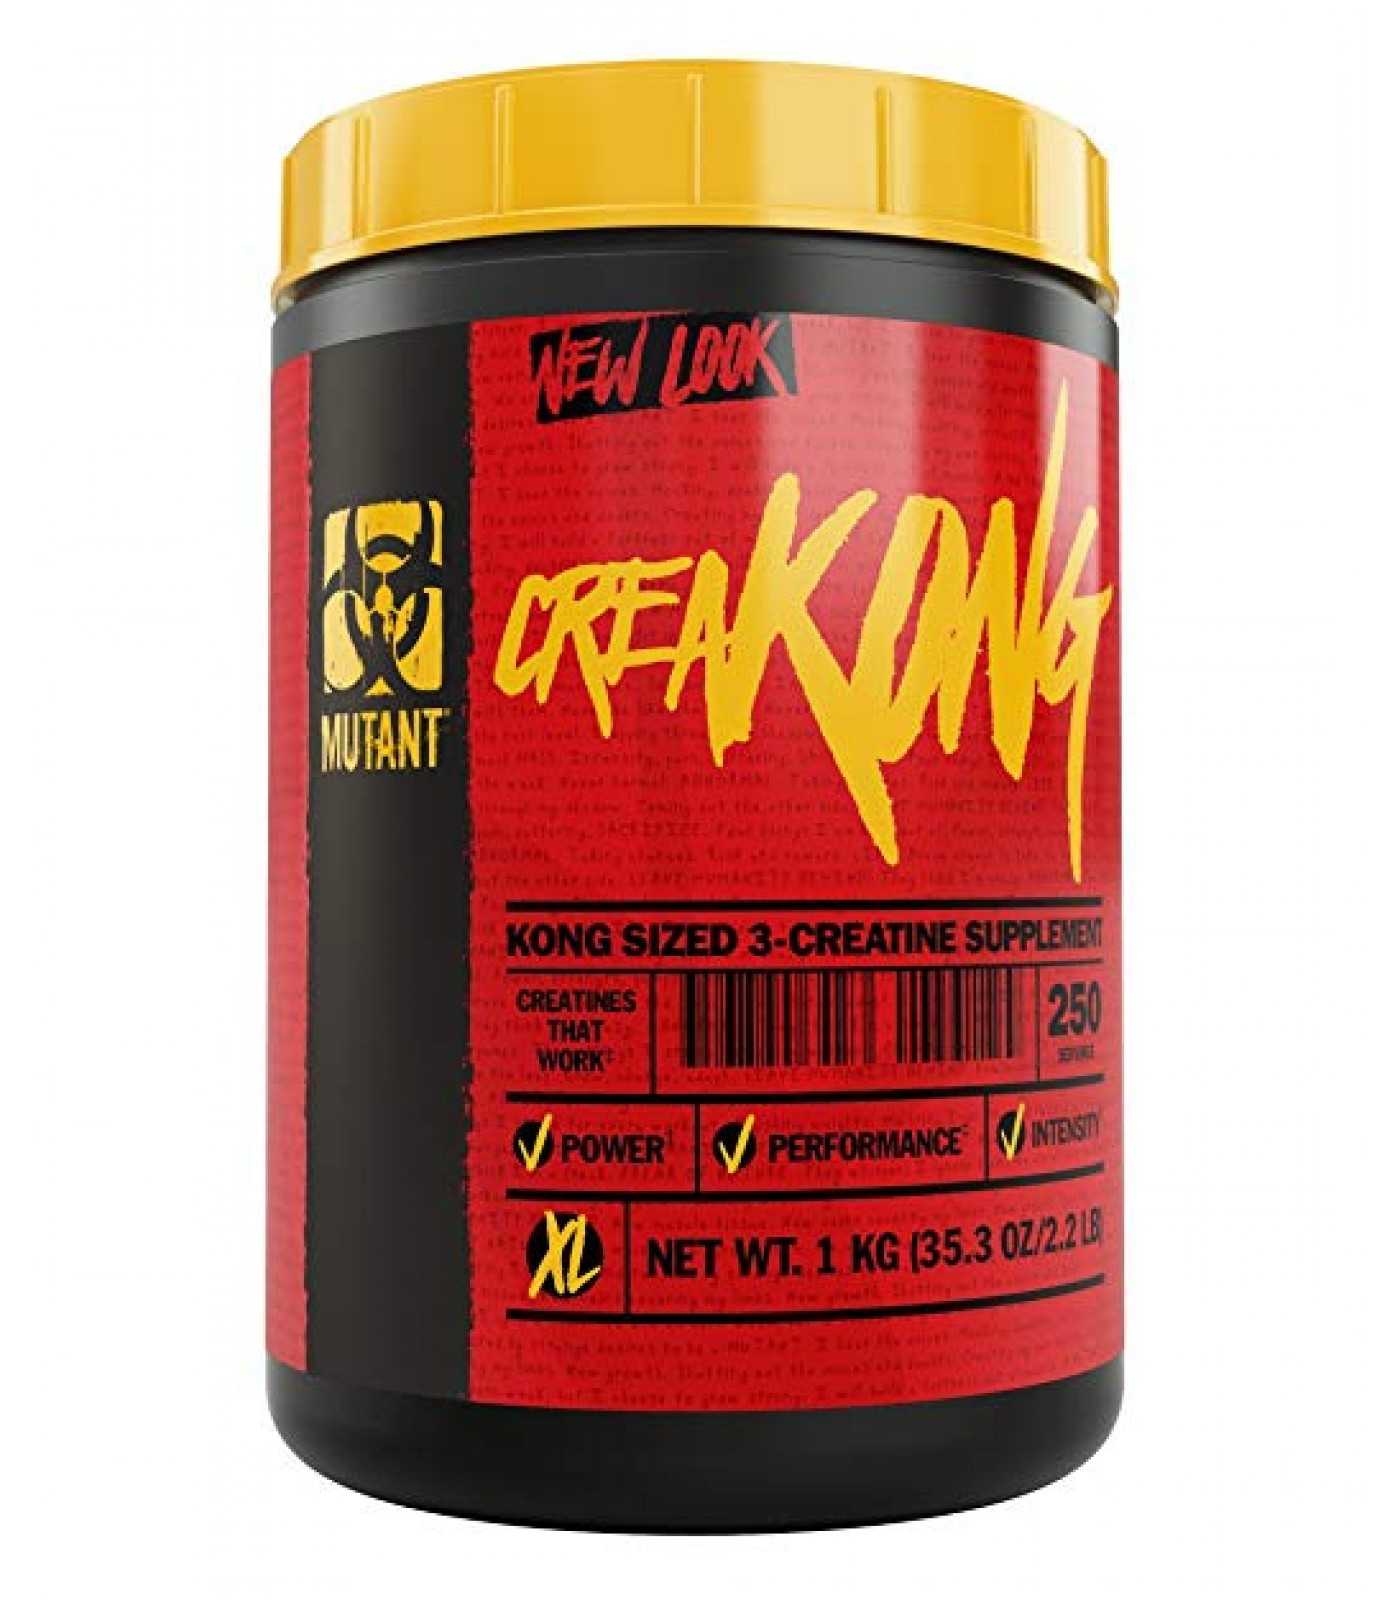 Mutant - CreaKong / 1000 gr.